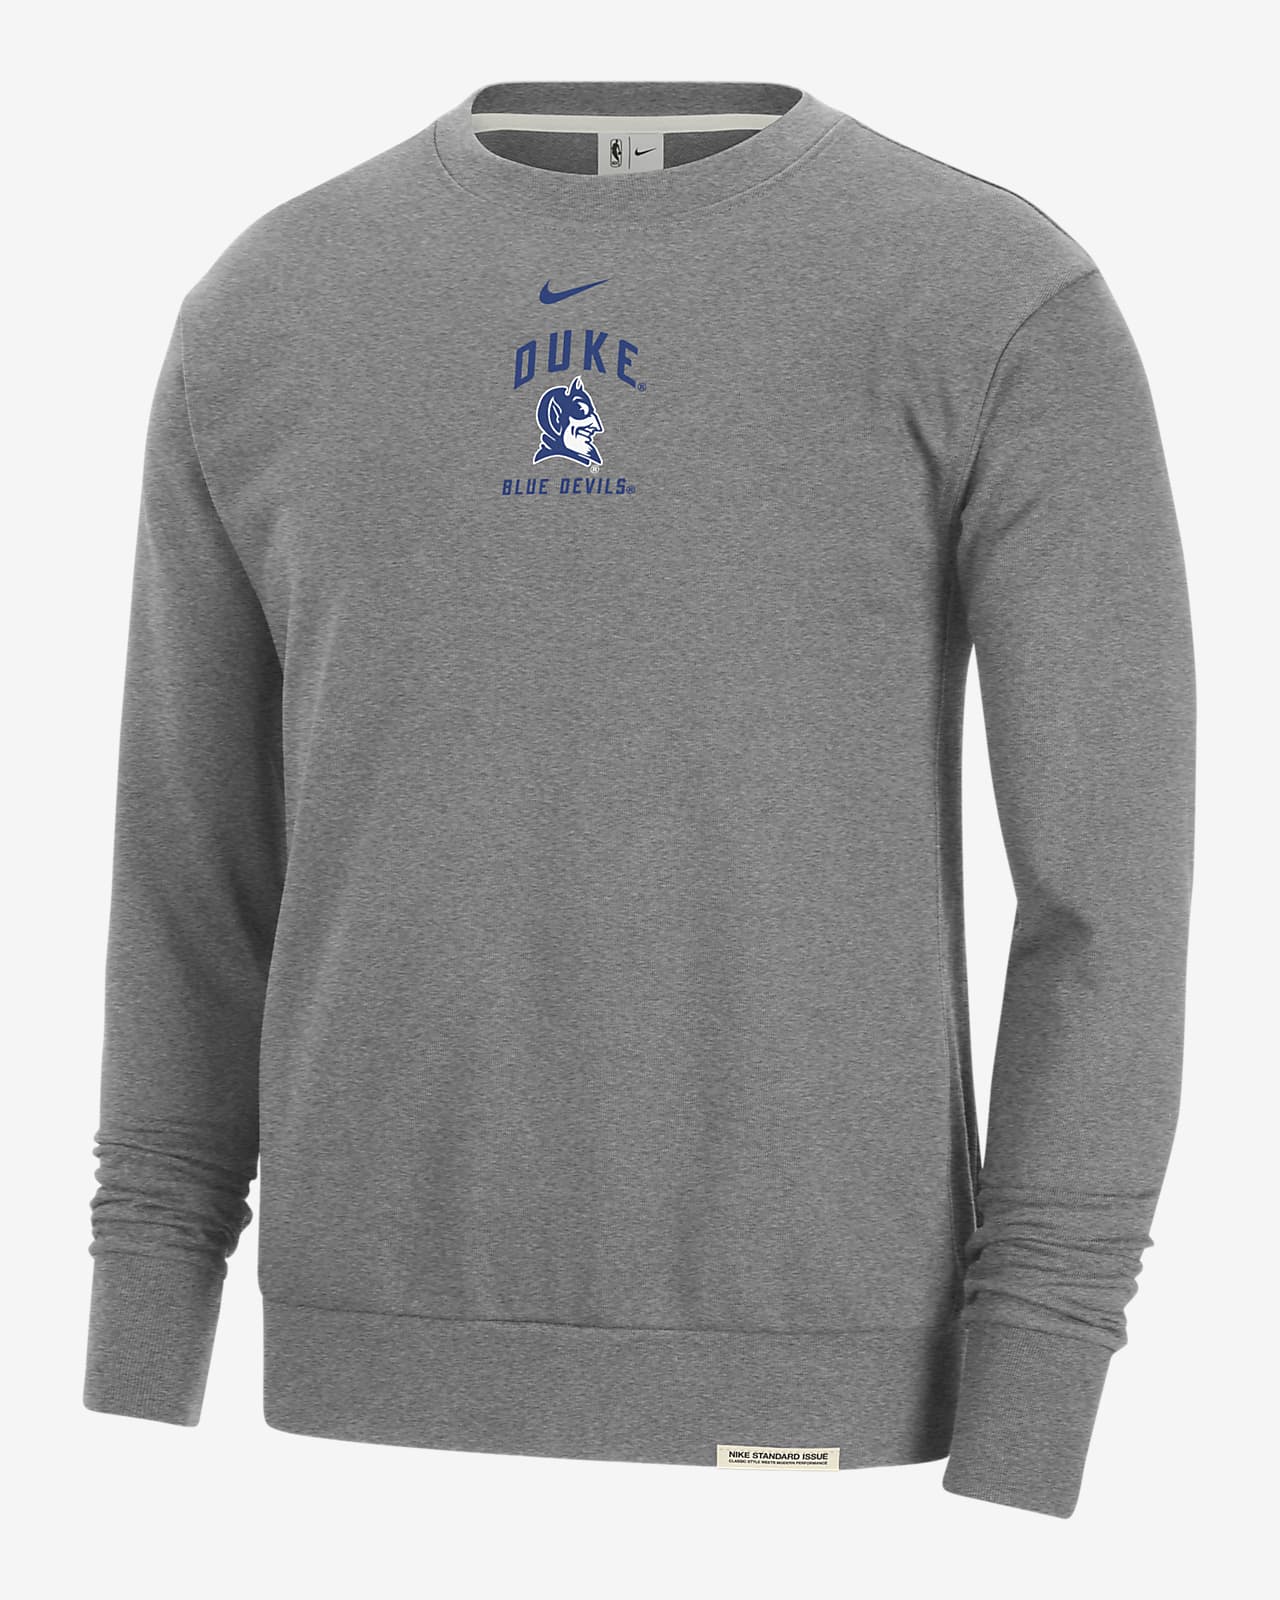 Duke Standard Issue Men's Nike College Fleece Crew-Neck Sweatshirt